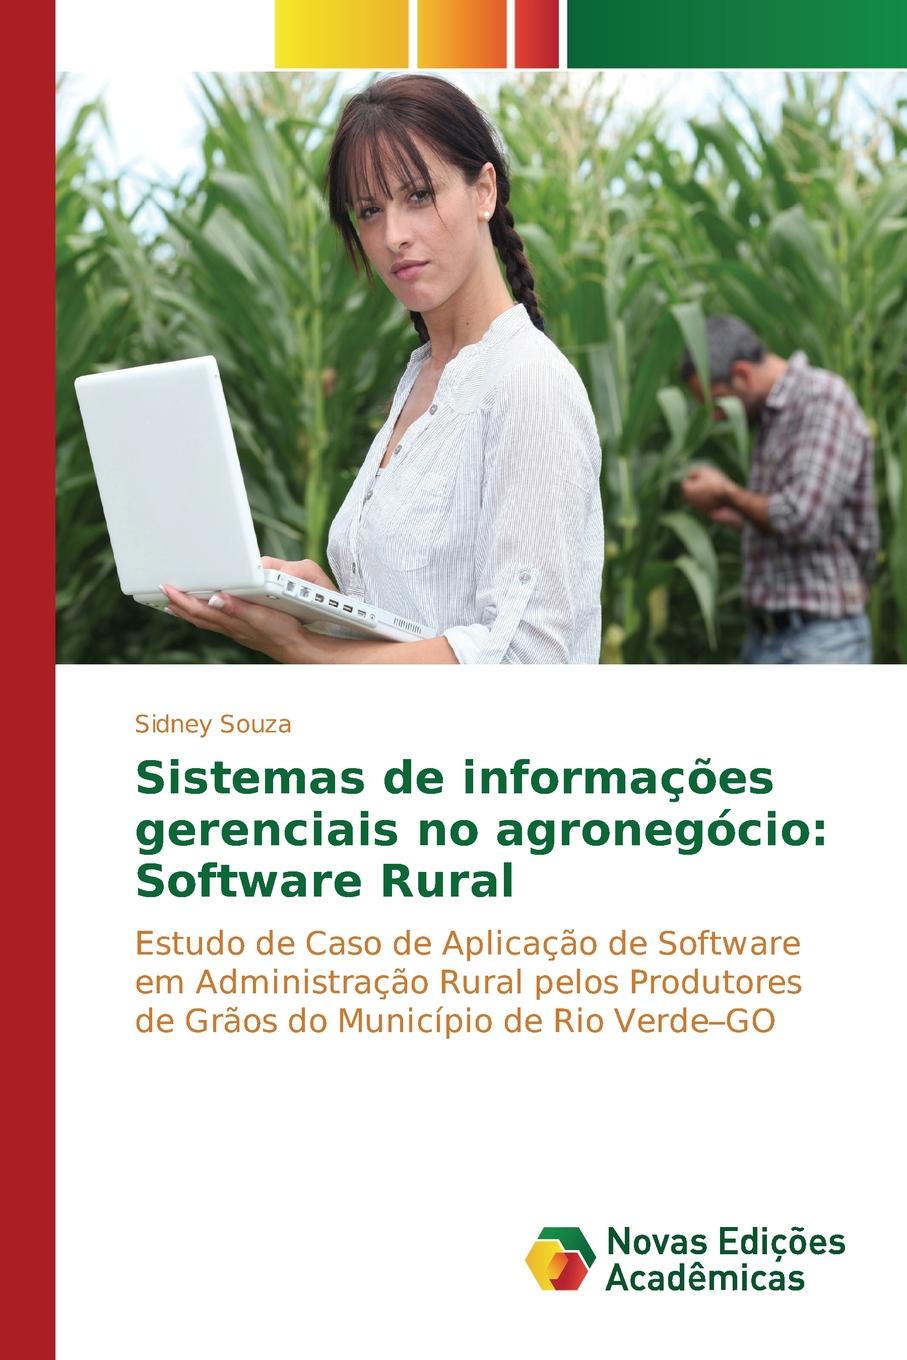 Sistemas de informacoes gerenciais no agronegocio. Software Rural